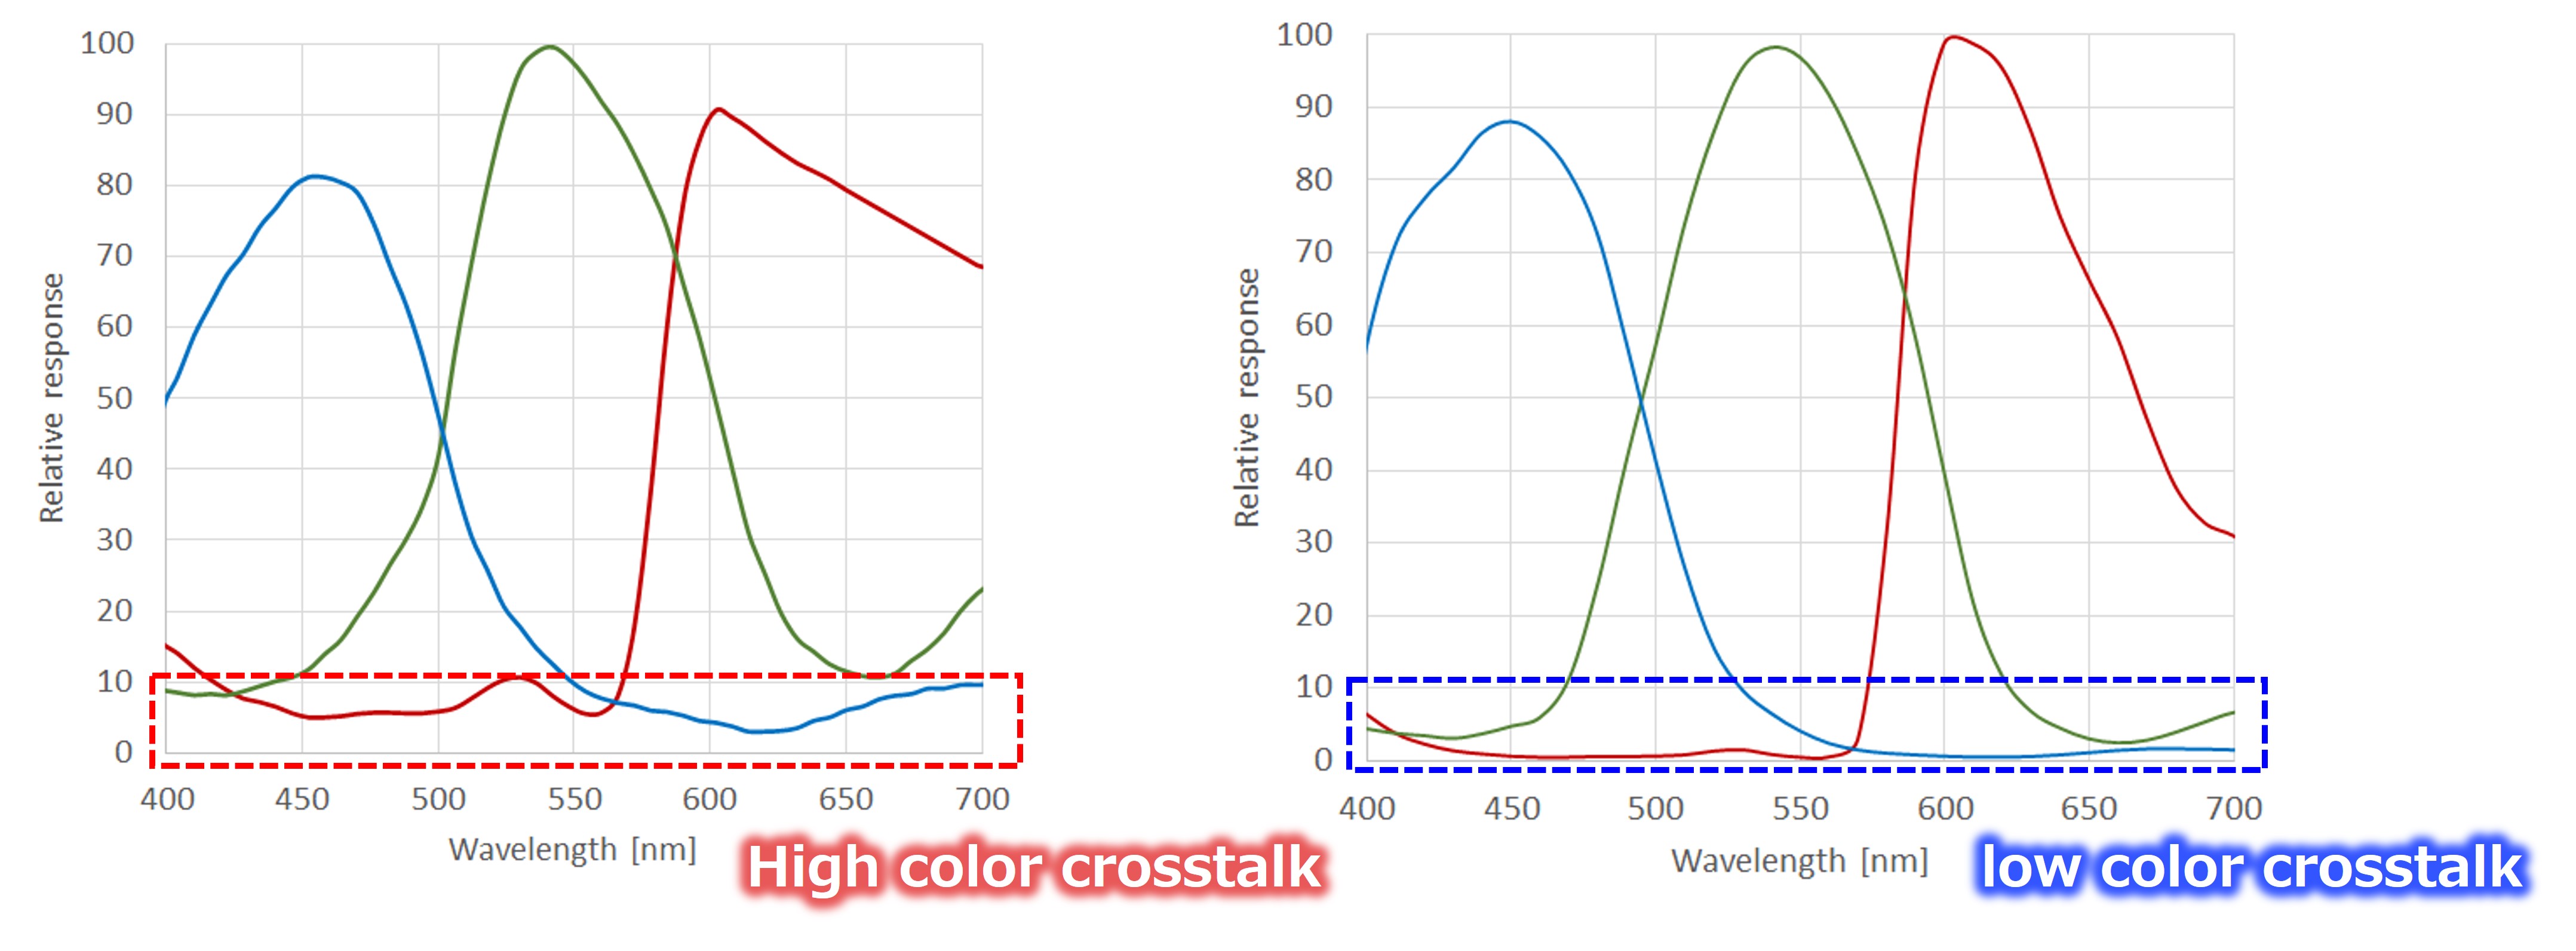 Figure 2. Comparison of spectral characteristics